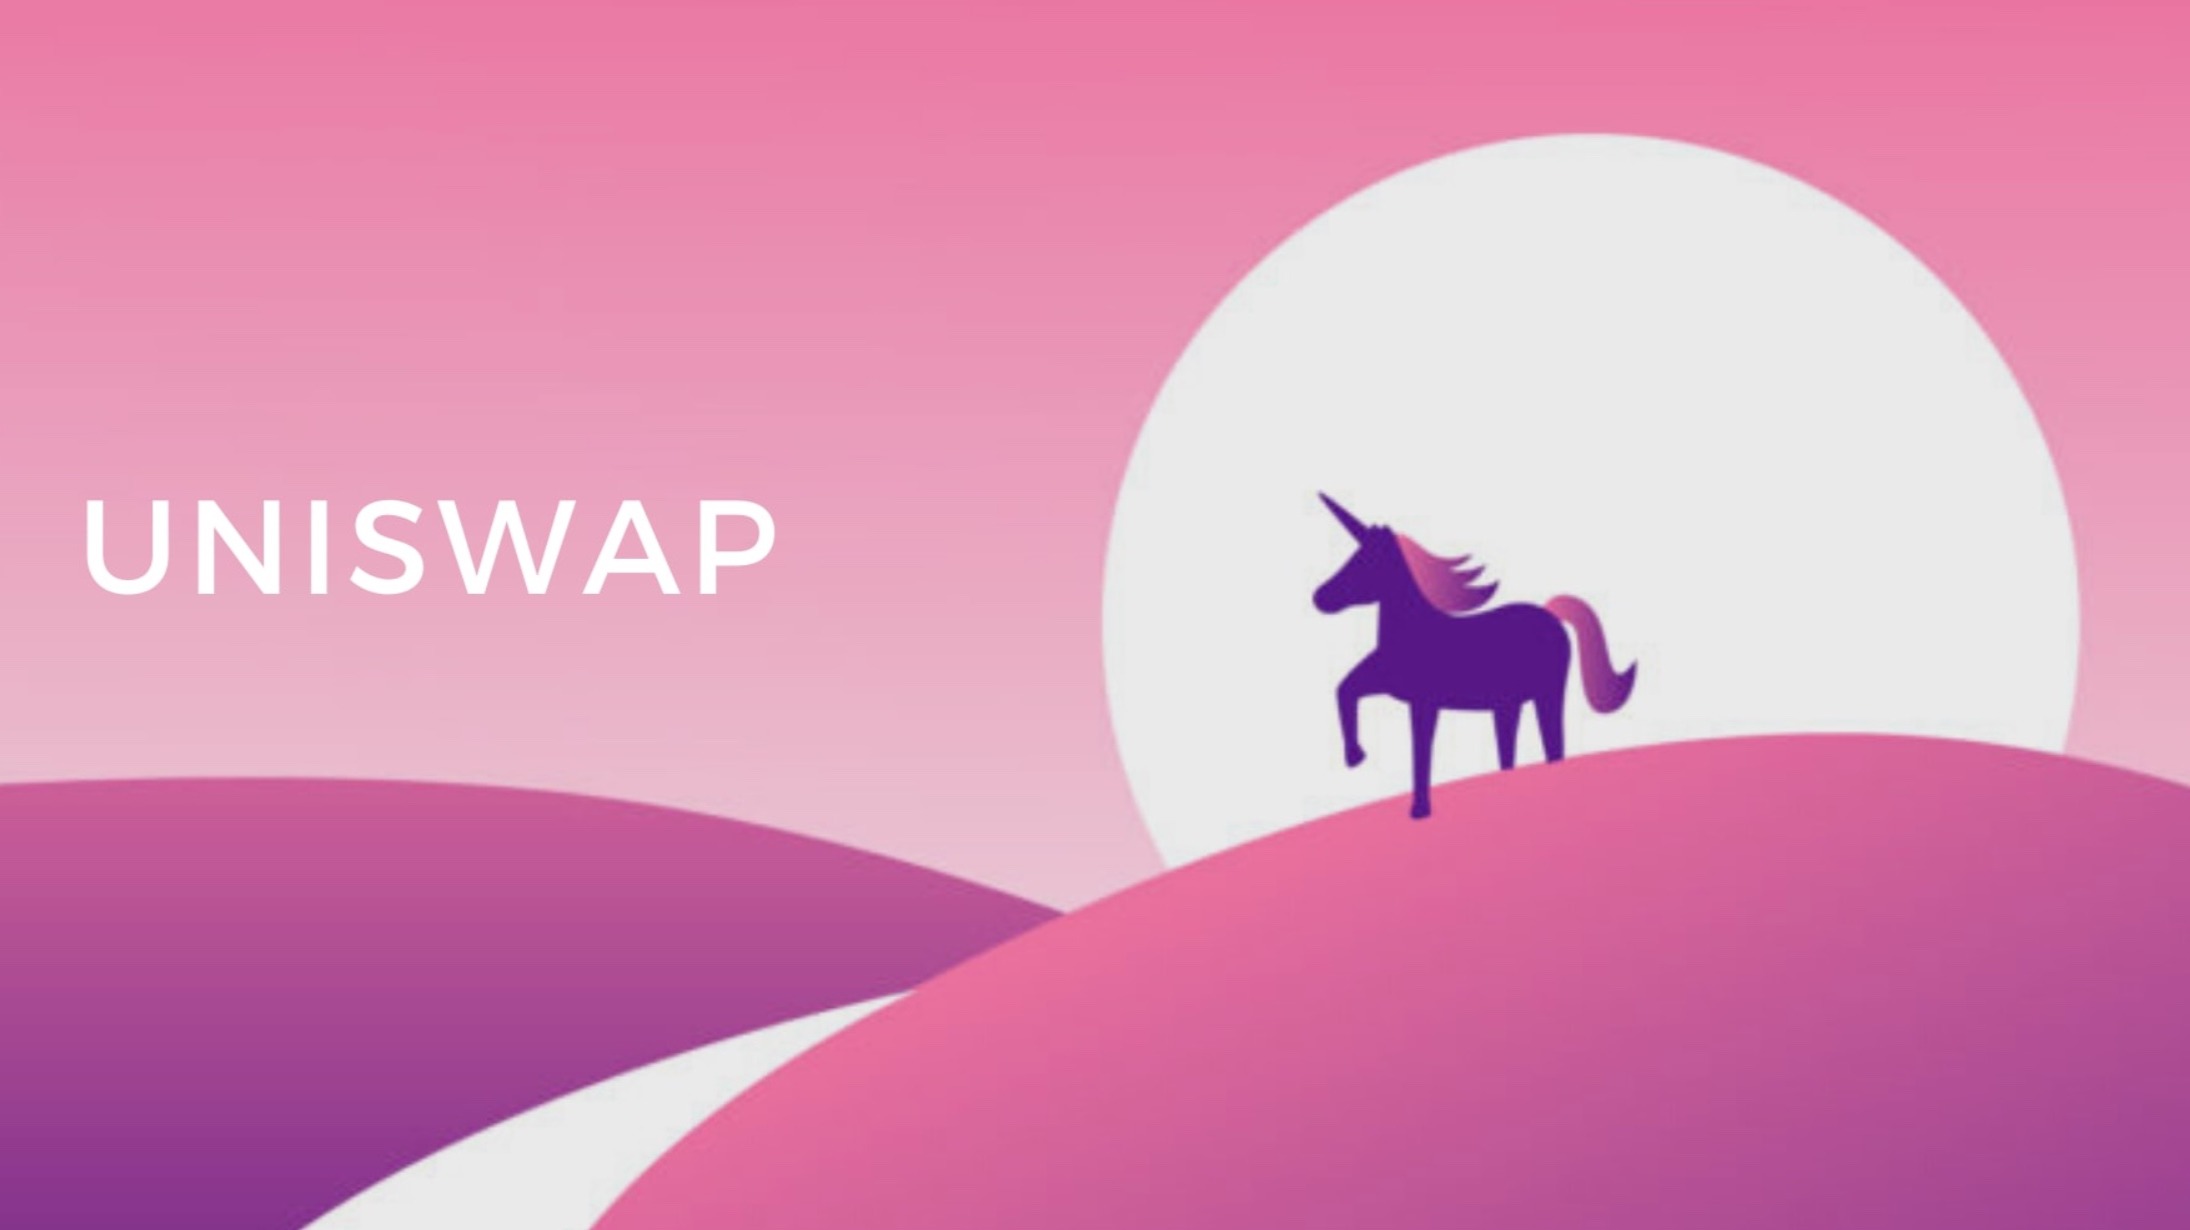 Uniswap تسجل رقماً قياسياً بلغ 10 مليارات دولار في حجم التداول الأسبوعي